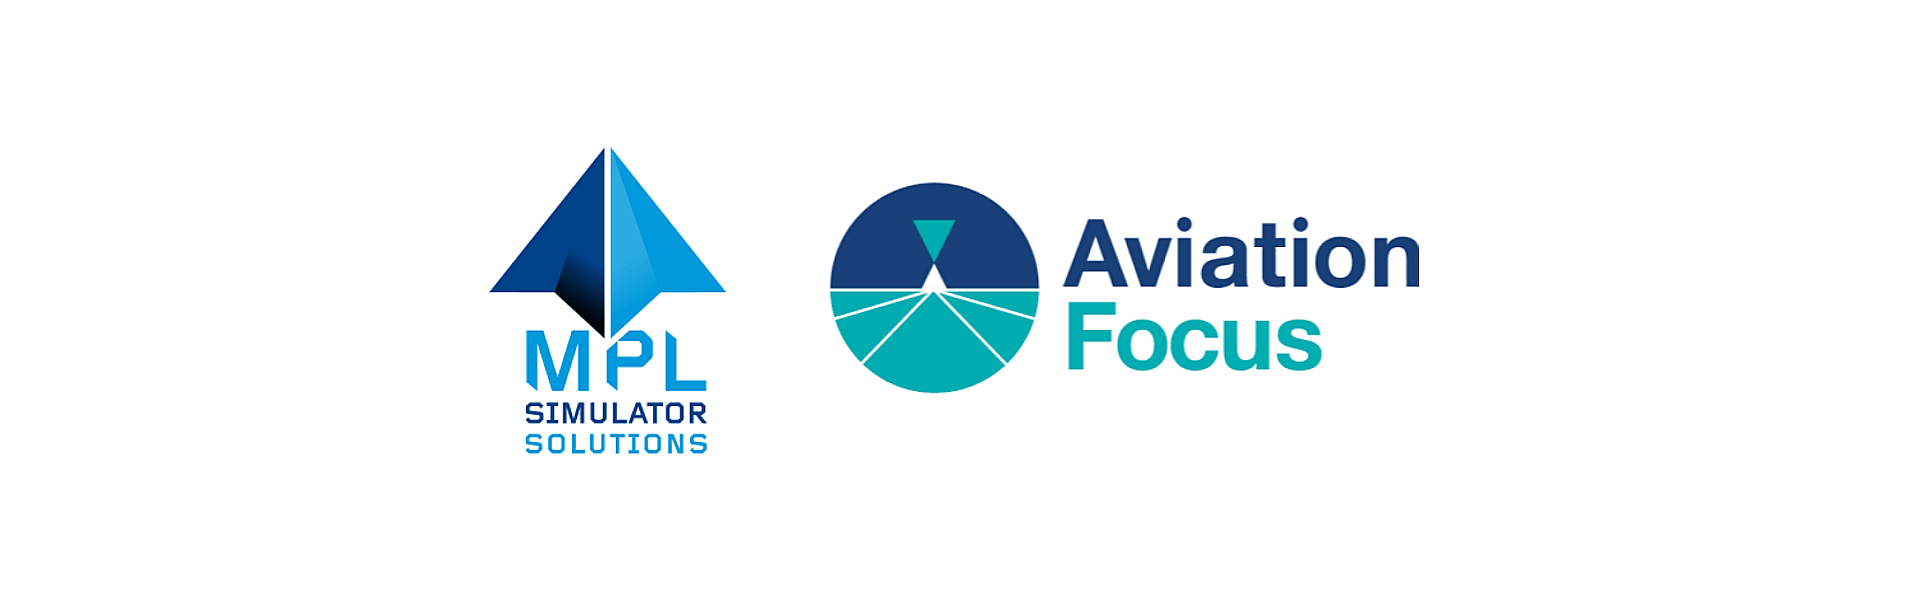 Logo MPL Simulator Solutions next to logo Aviation Focus